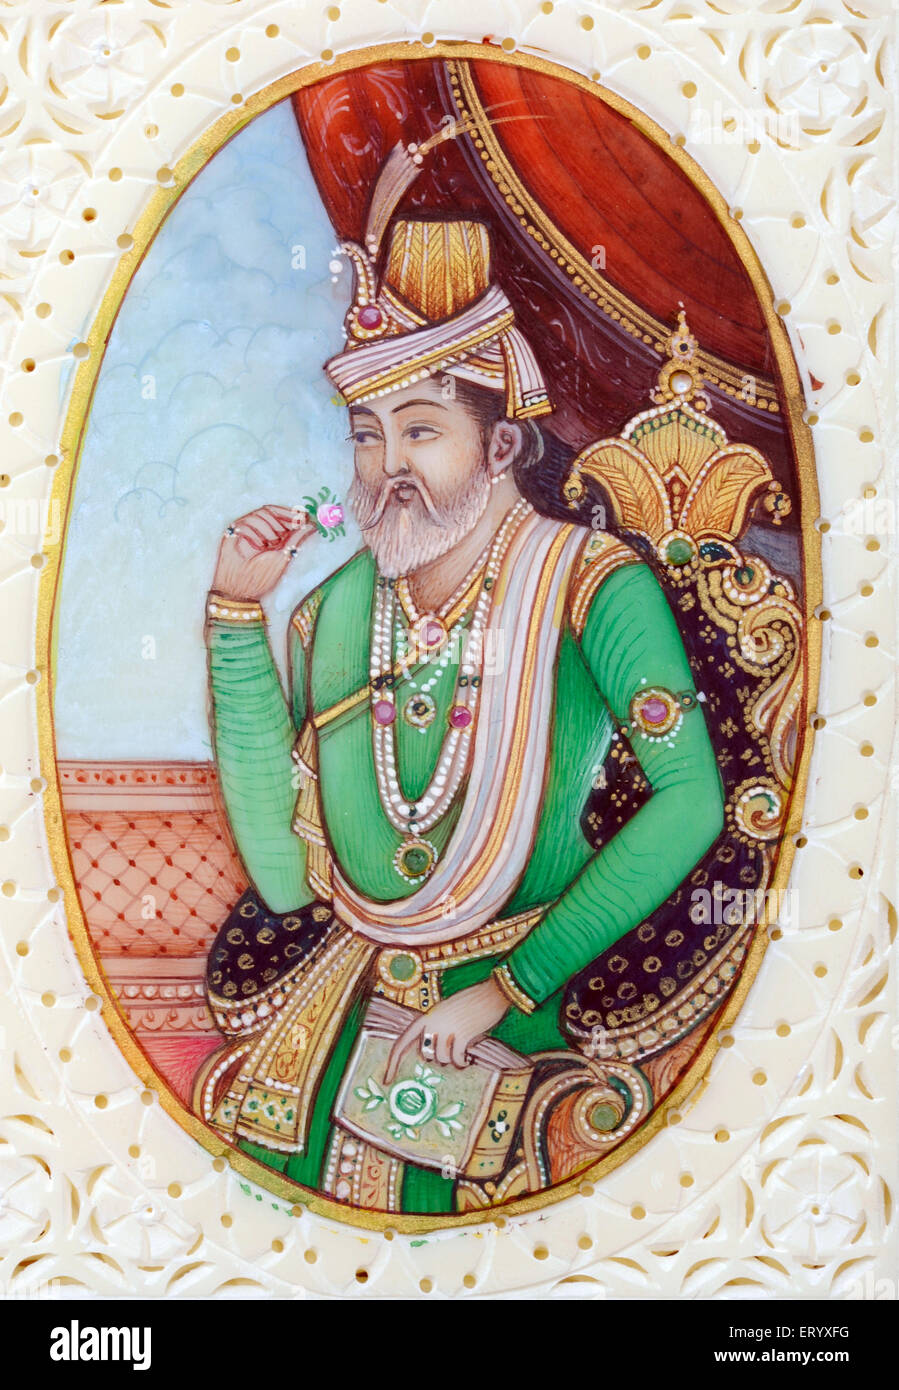 Miniature painting of mughal emperor humayun Stock Photo